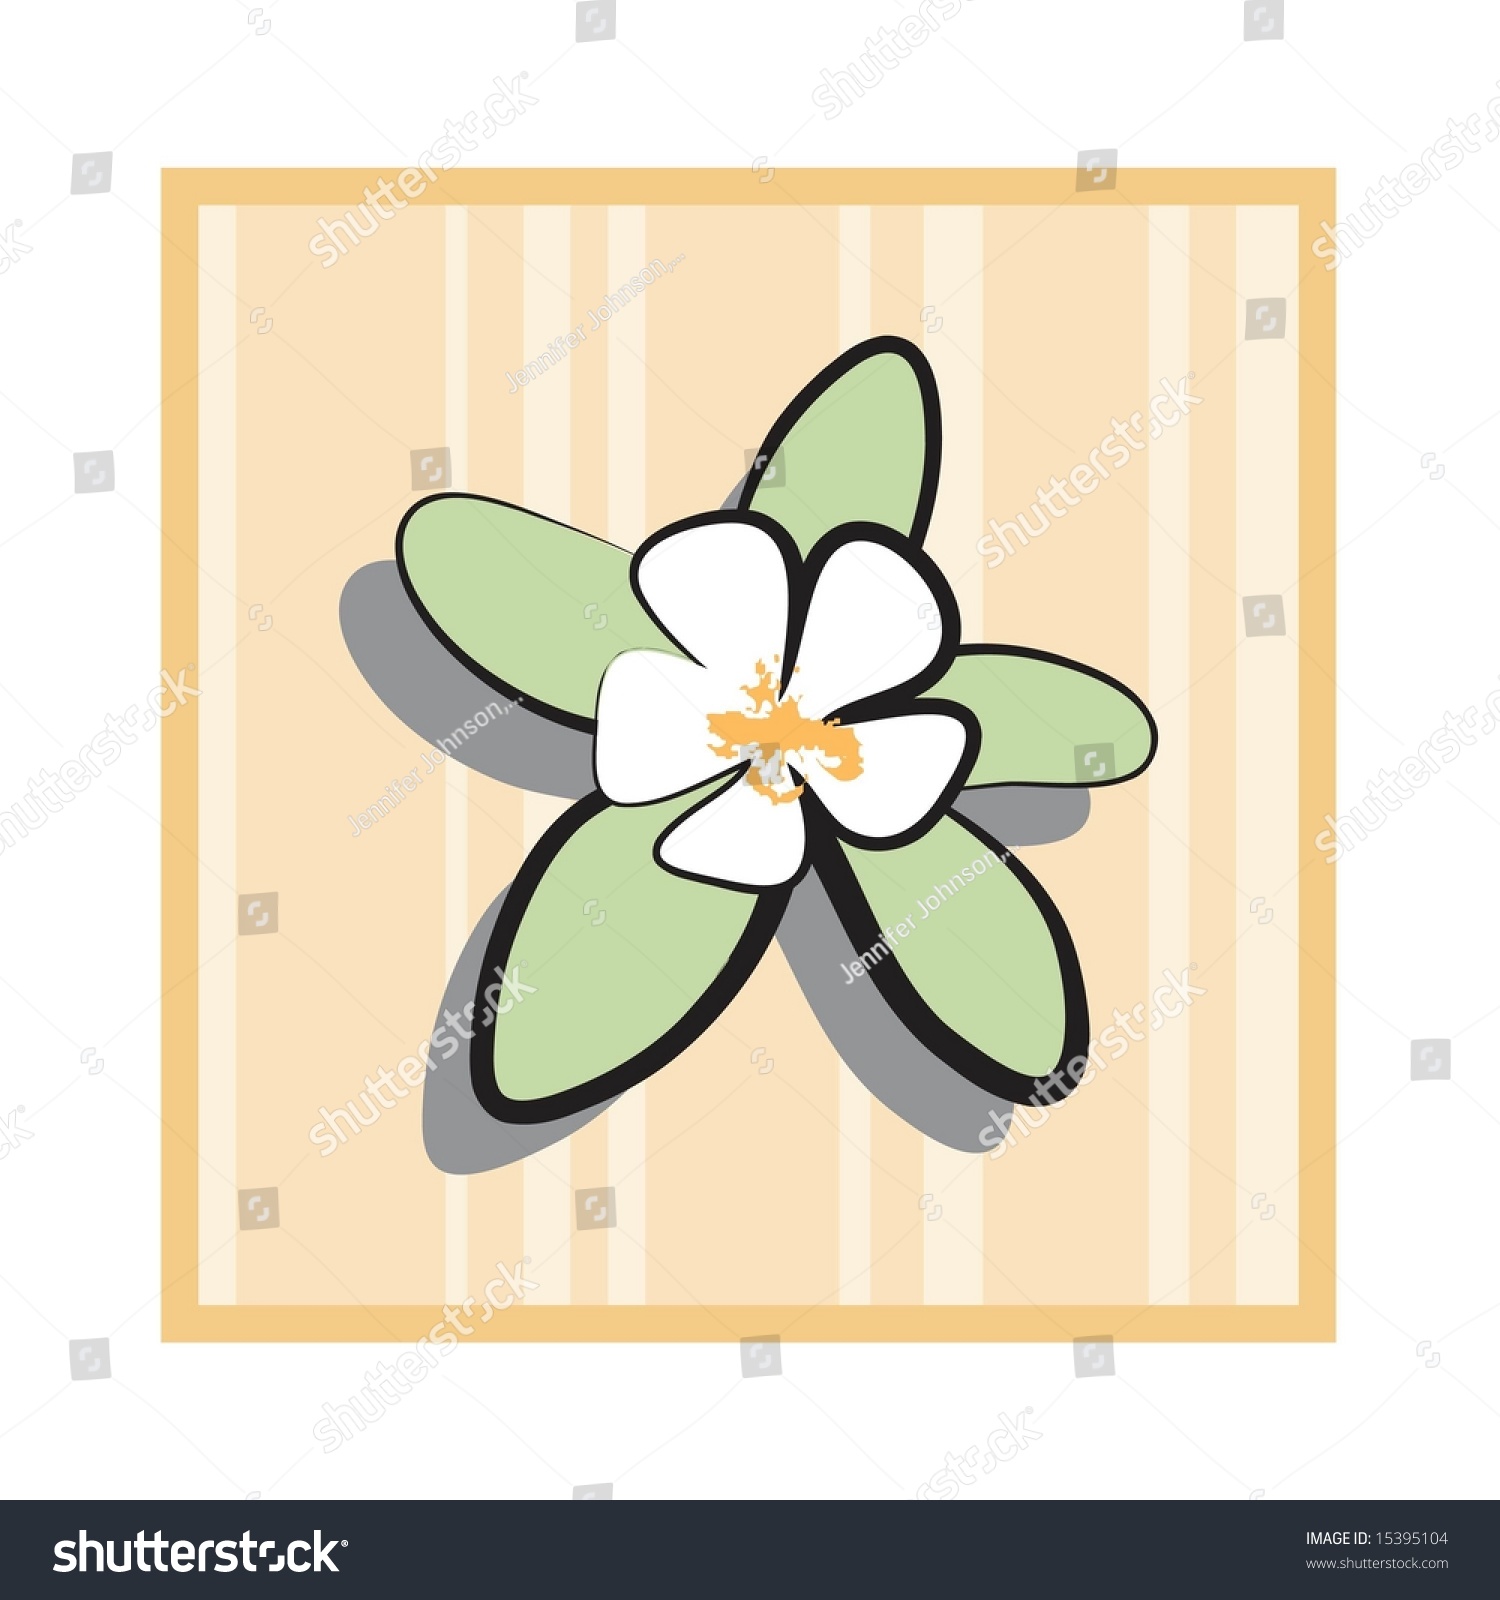 Vector Beautiful Flower On Striped Background - 15395104 : Shutterstock